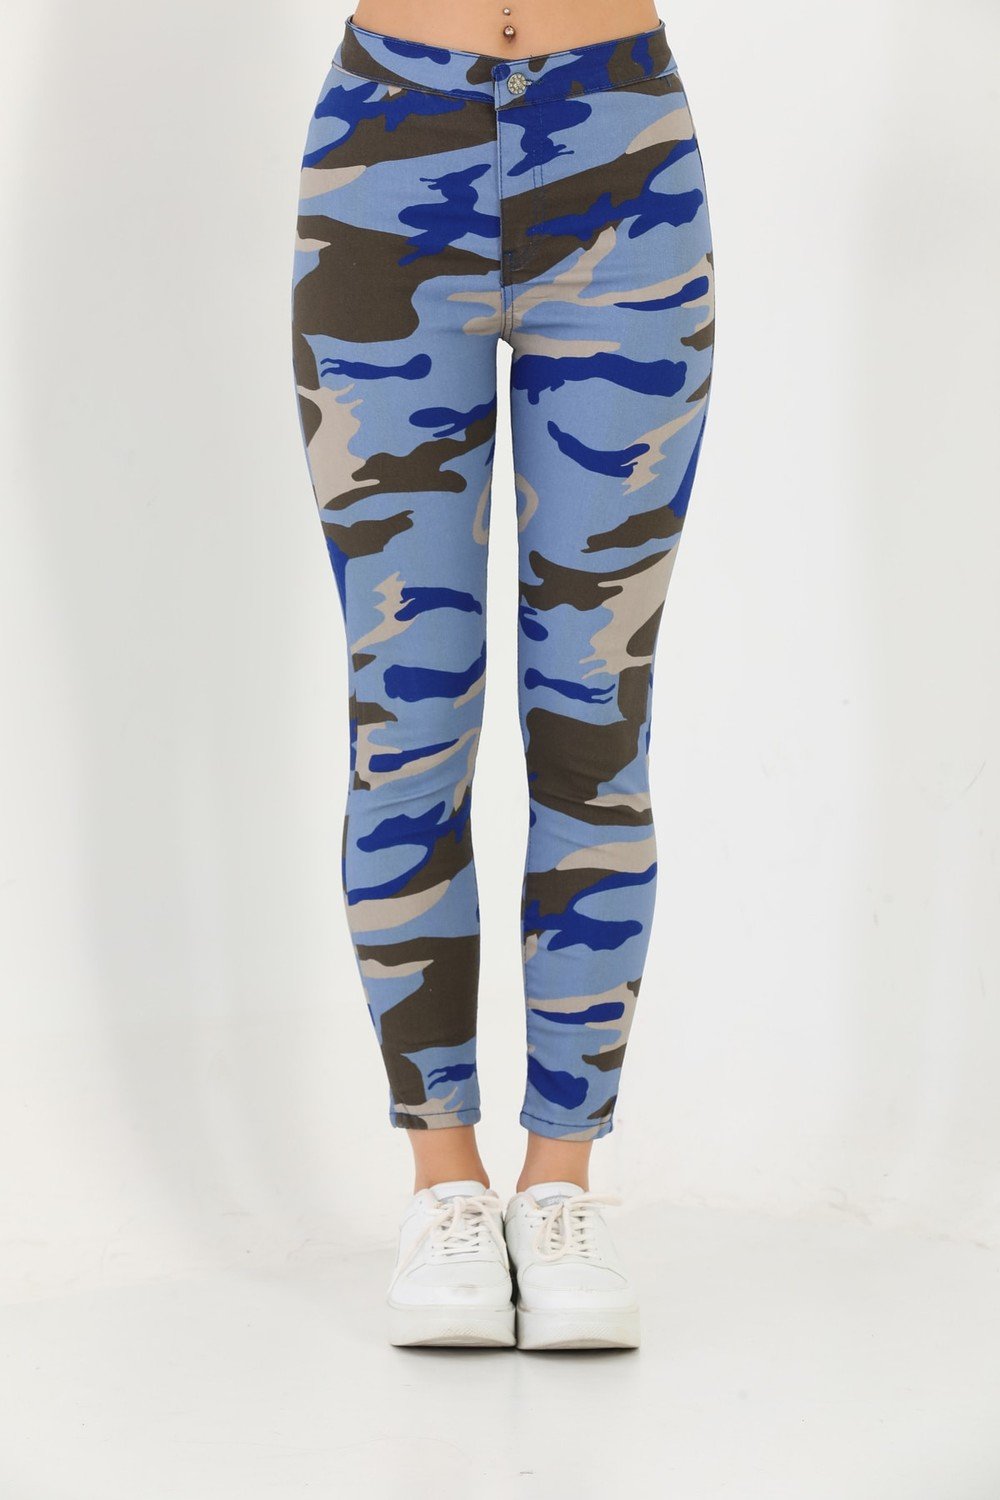 BİKELİFE Blue Camouflage Pattern Gabardine Leggings Pants